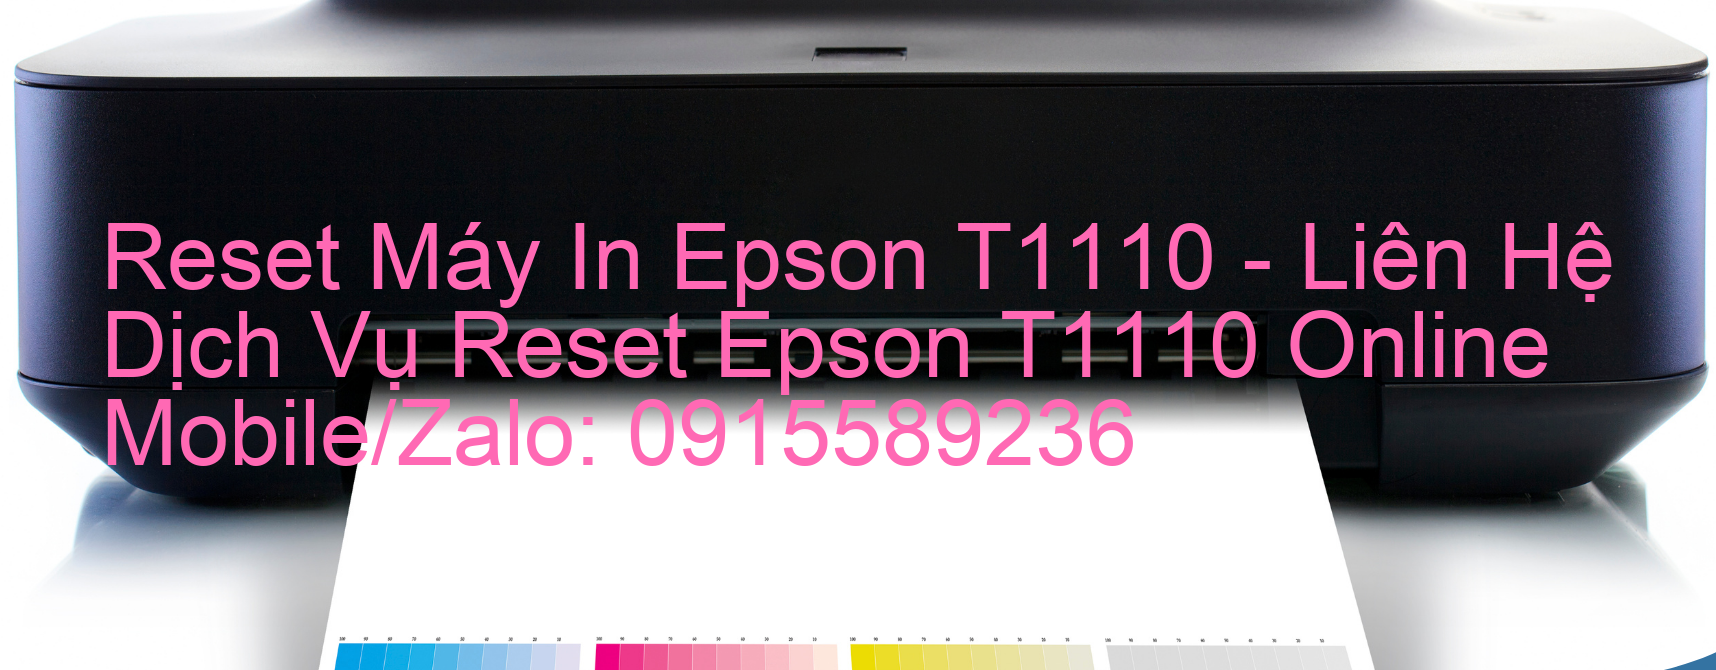 Reset Máy In Epson T1110 Online